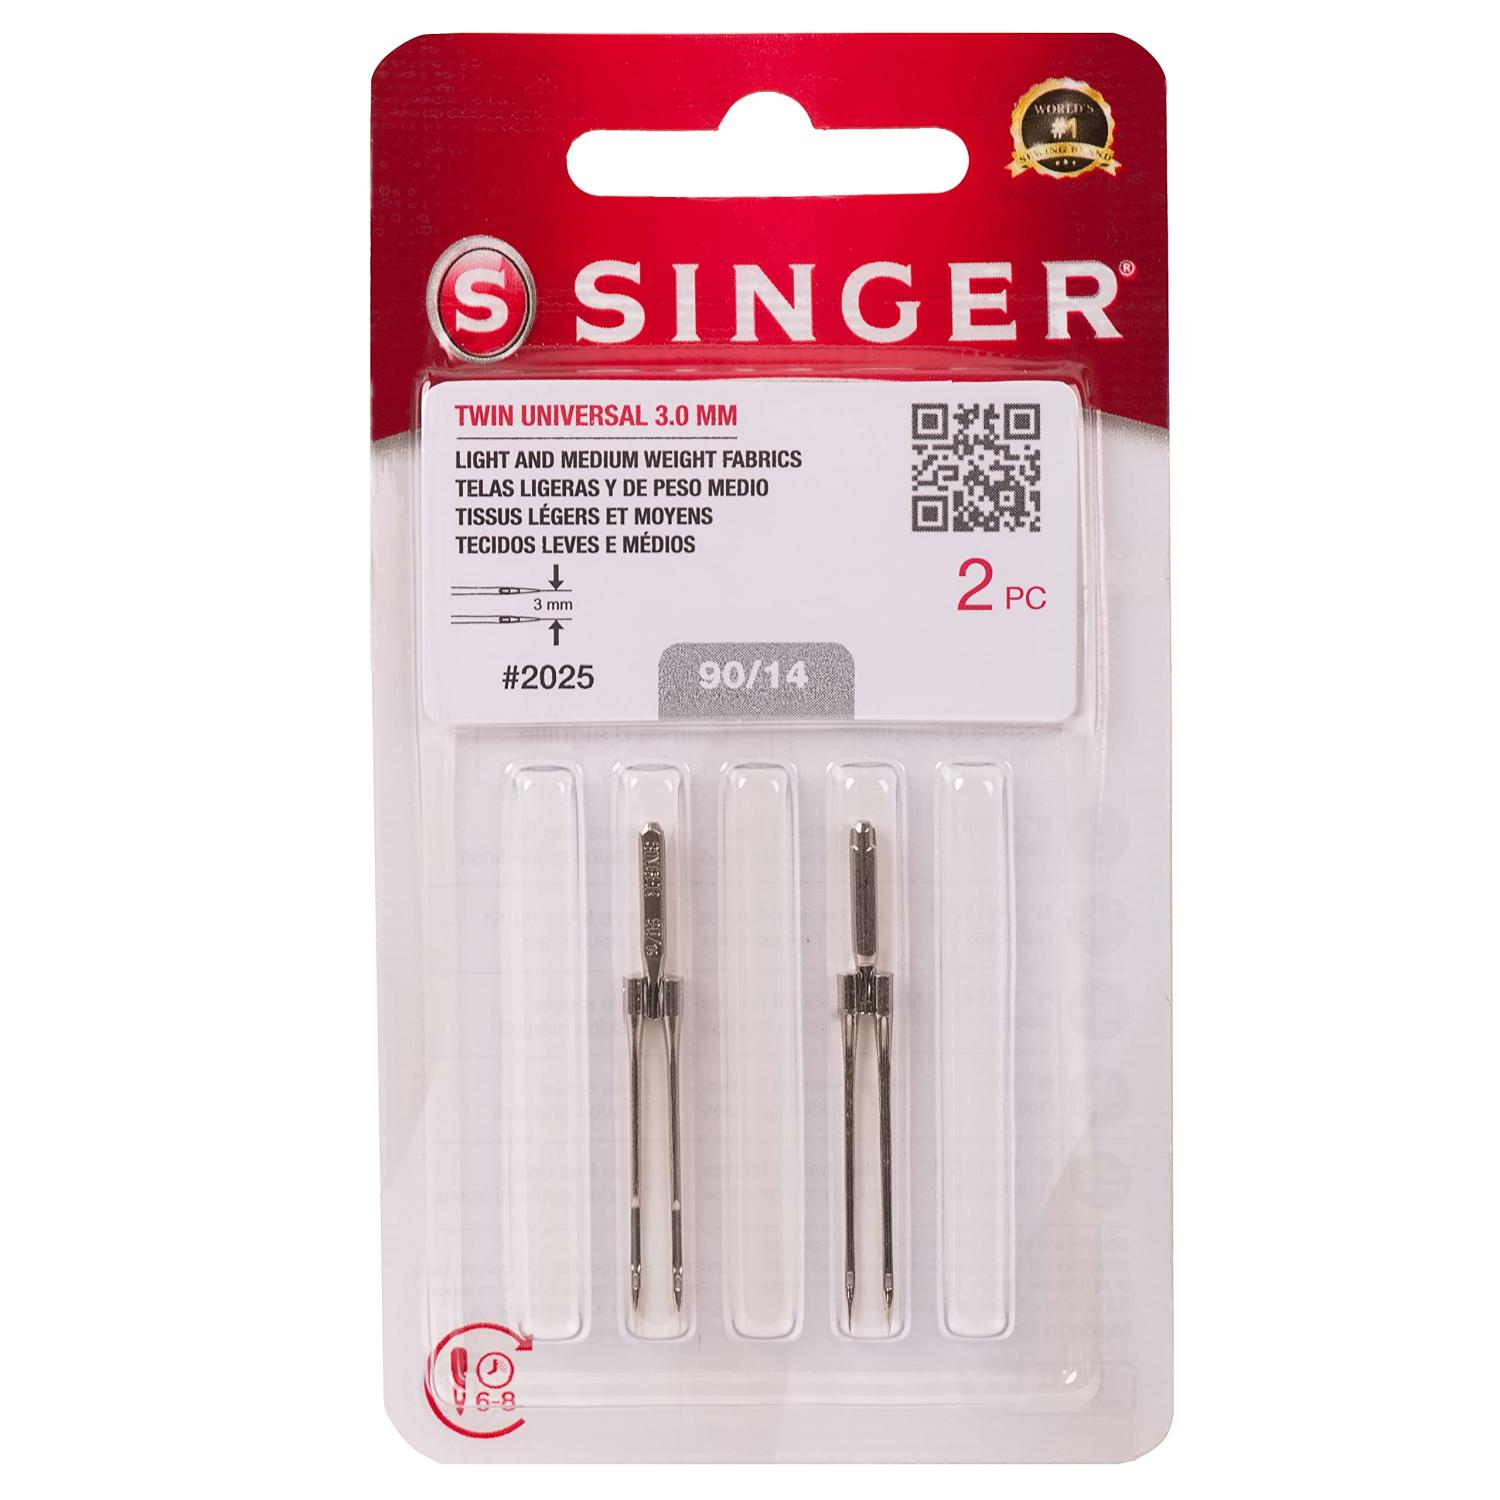 Singer Twin Universal Sewing Machine Needles, Size 90/14 - 2pcs